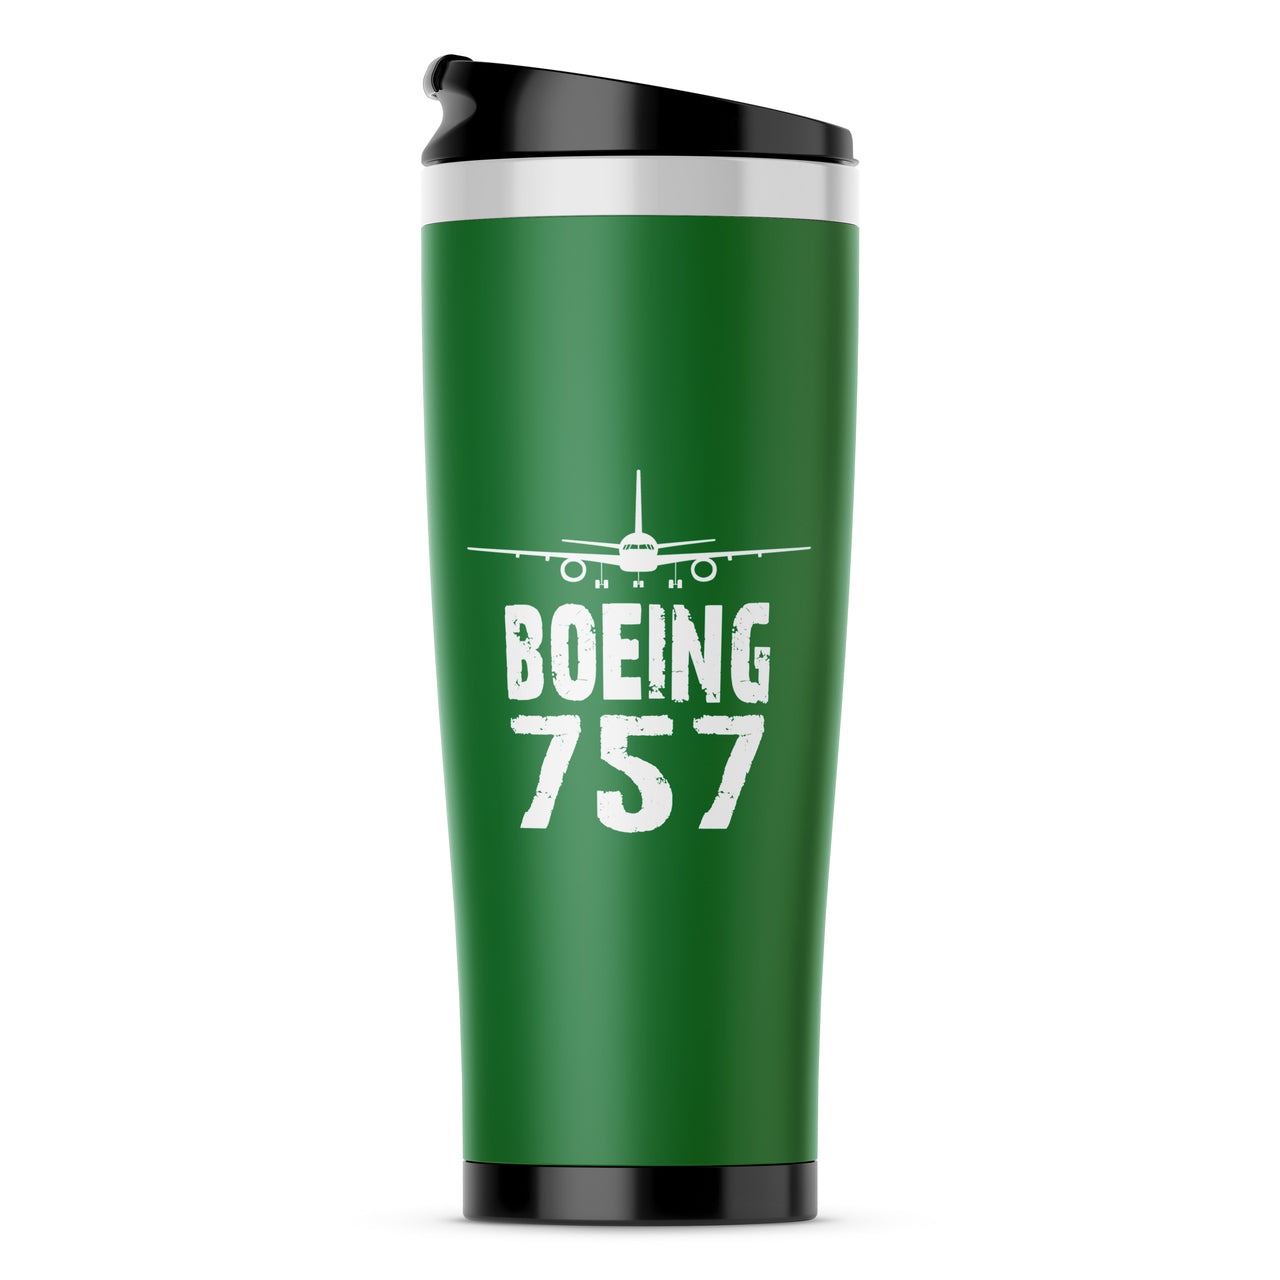 Boeing 757 & Plane Designed Travel Mugs